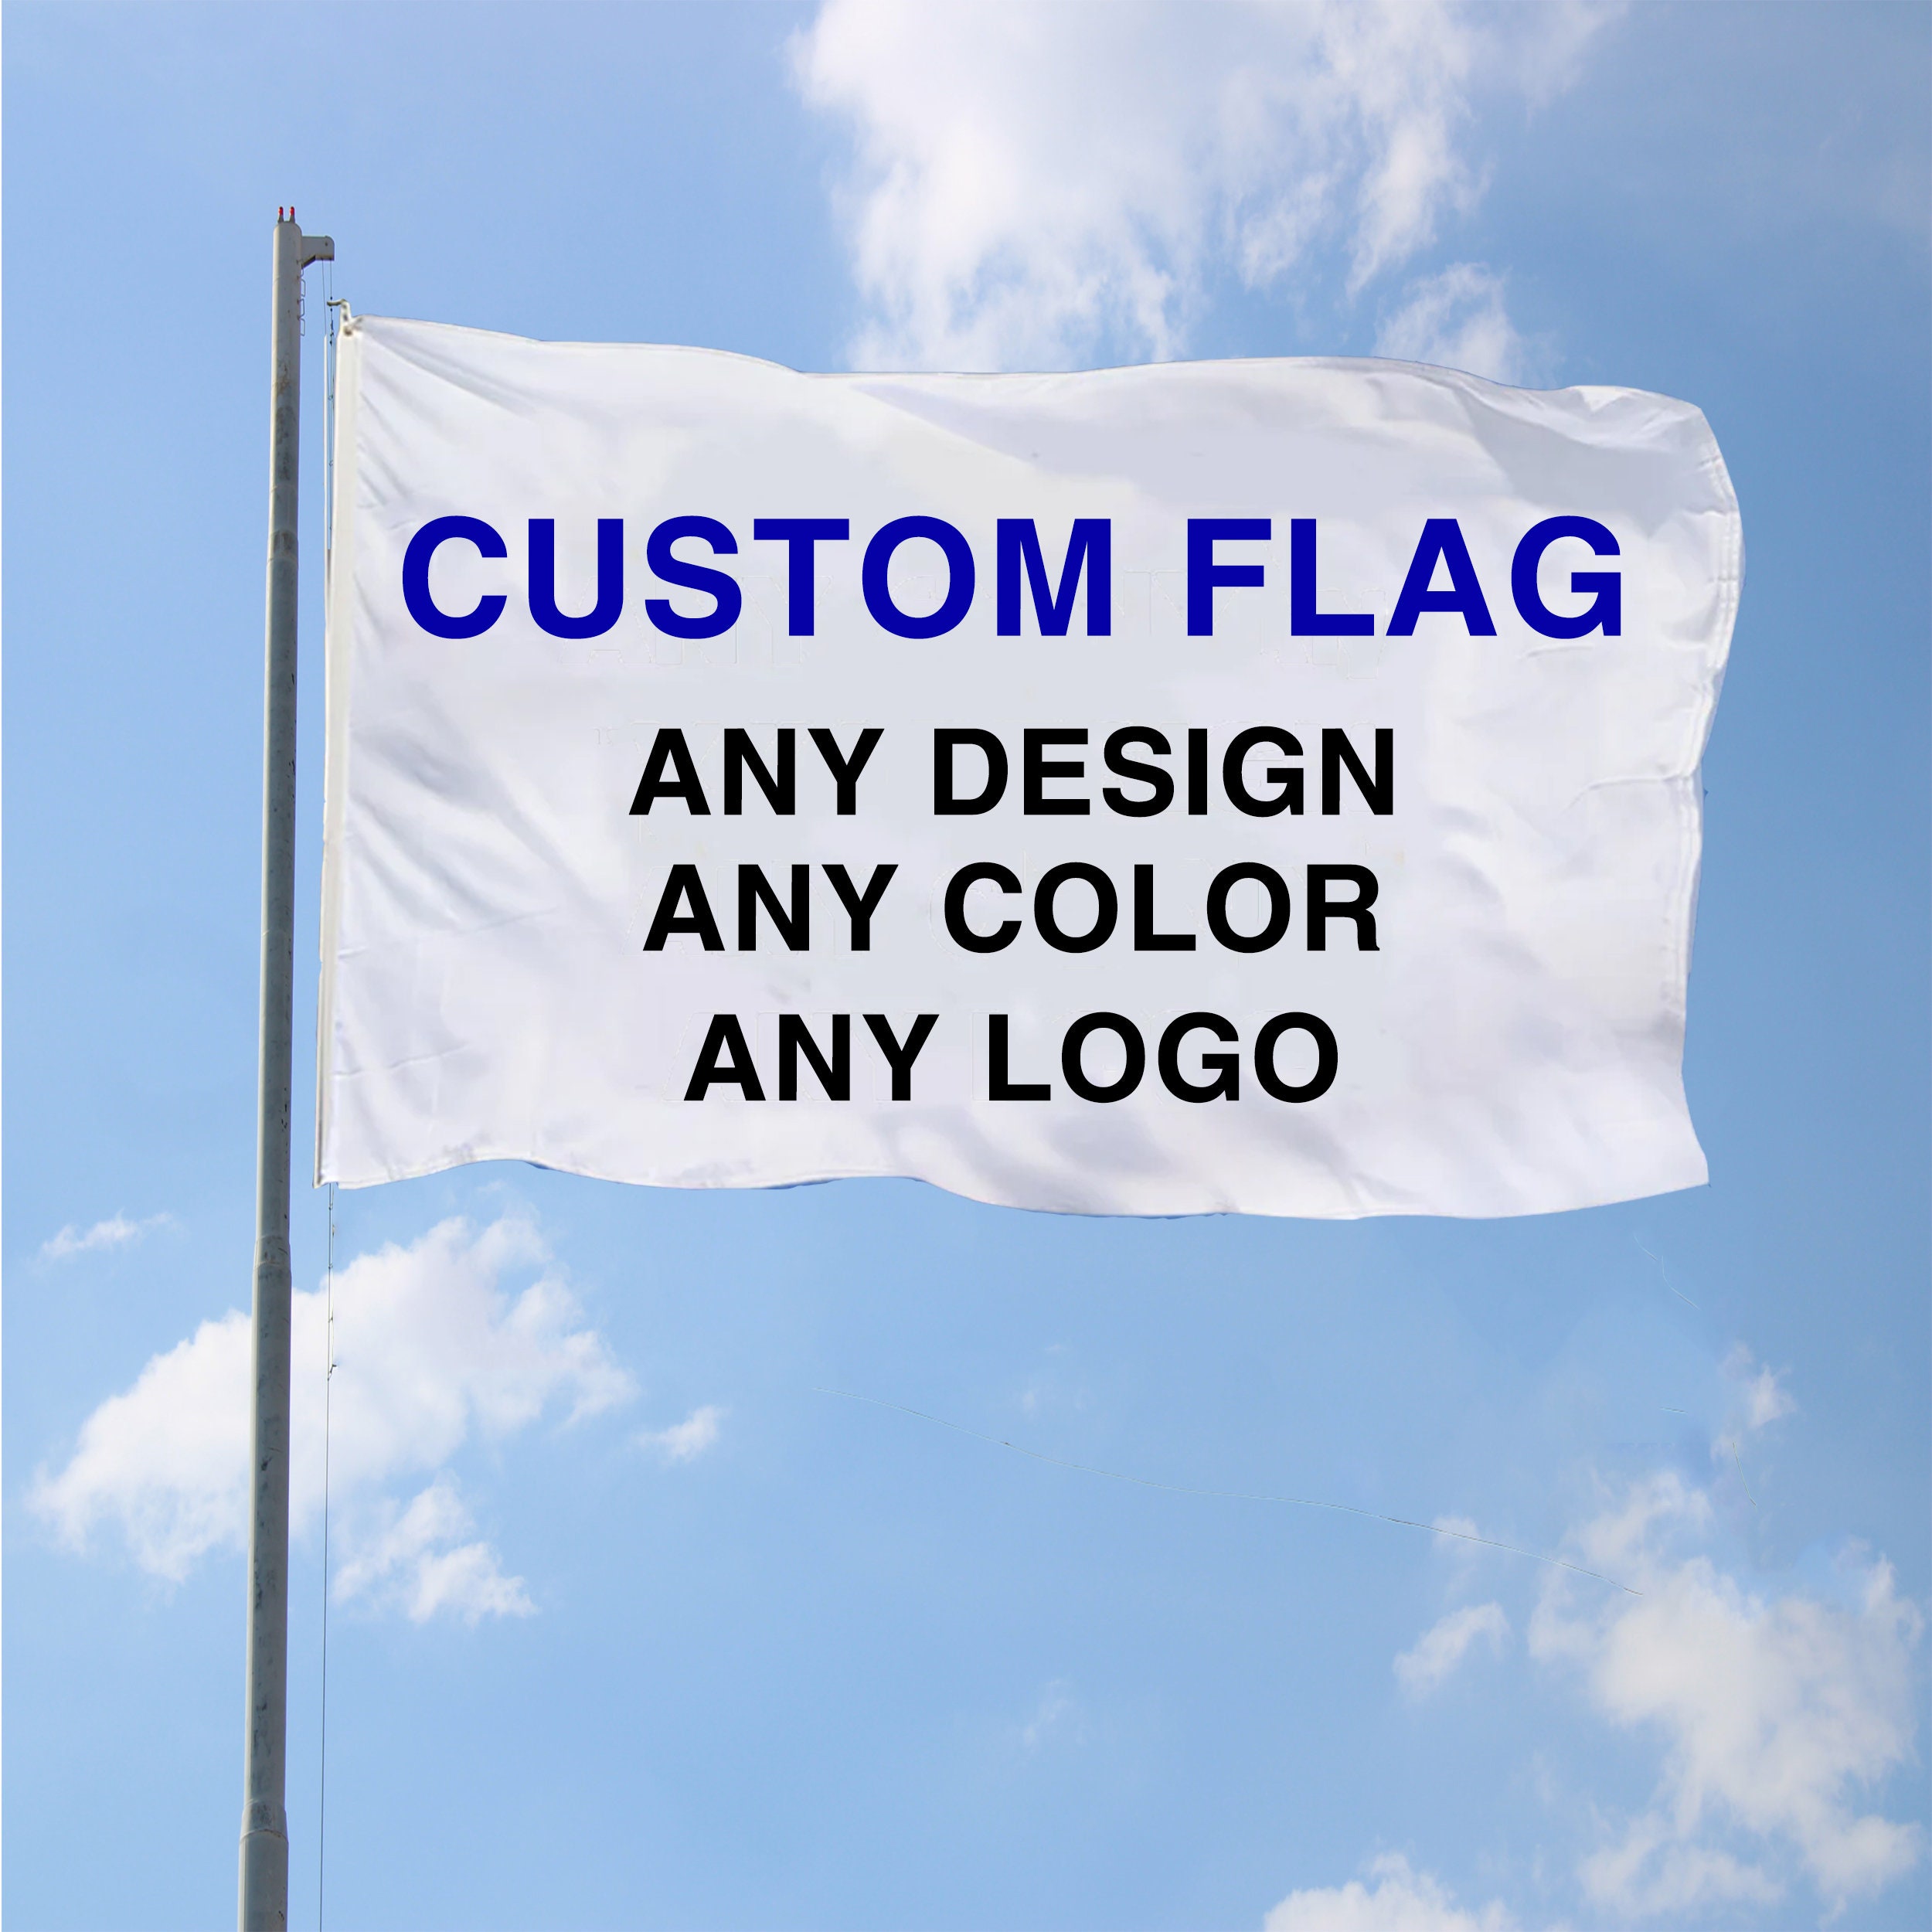 NEW-St. Louis Cardinals/Blues 3x5 Outdoor flag/Banner - Flags & Flag Poles, Facebook Marketplace